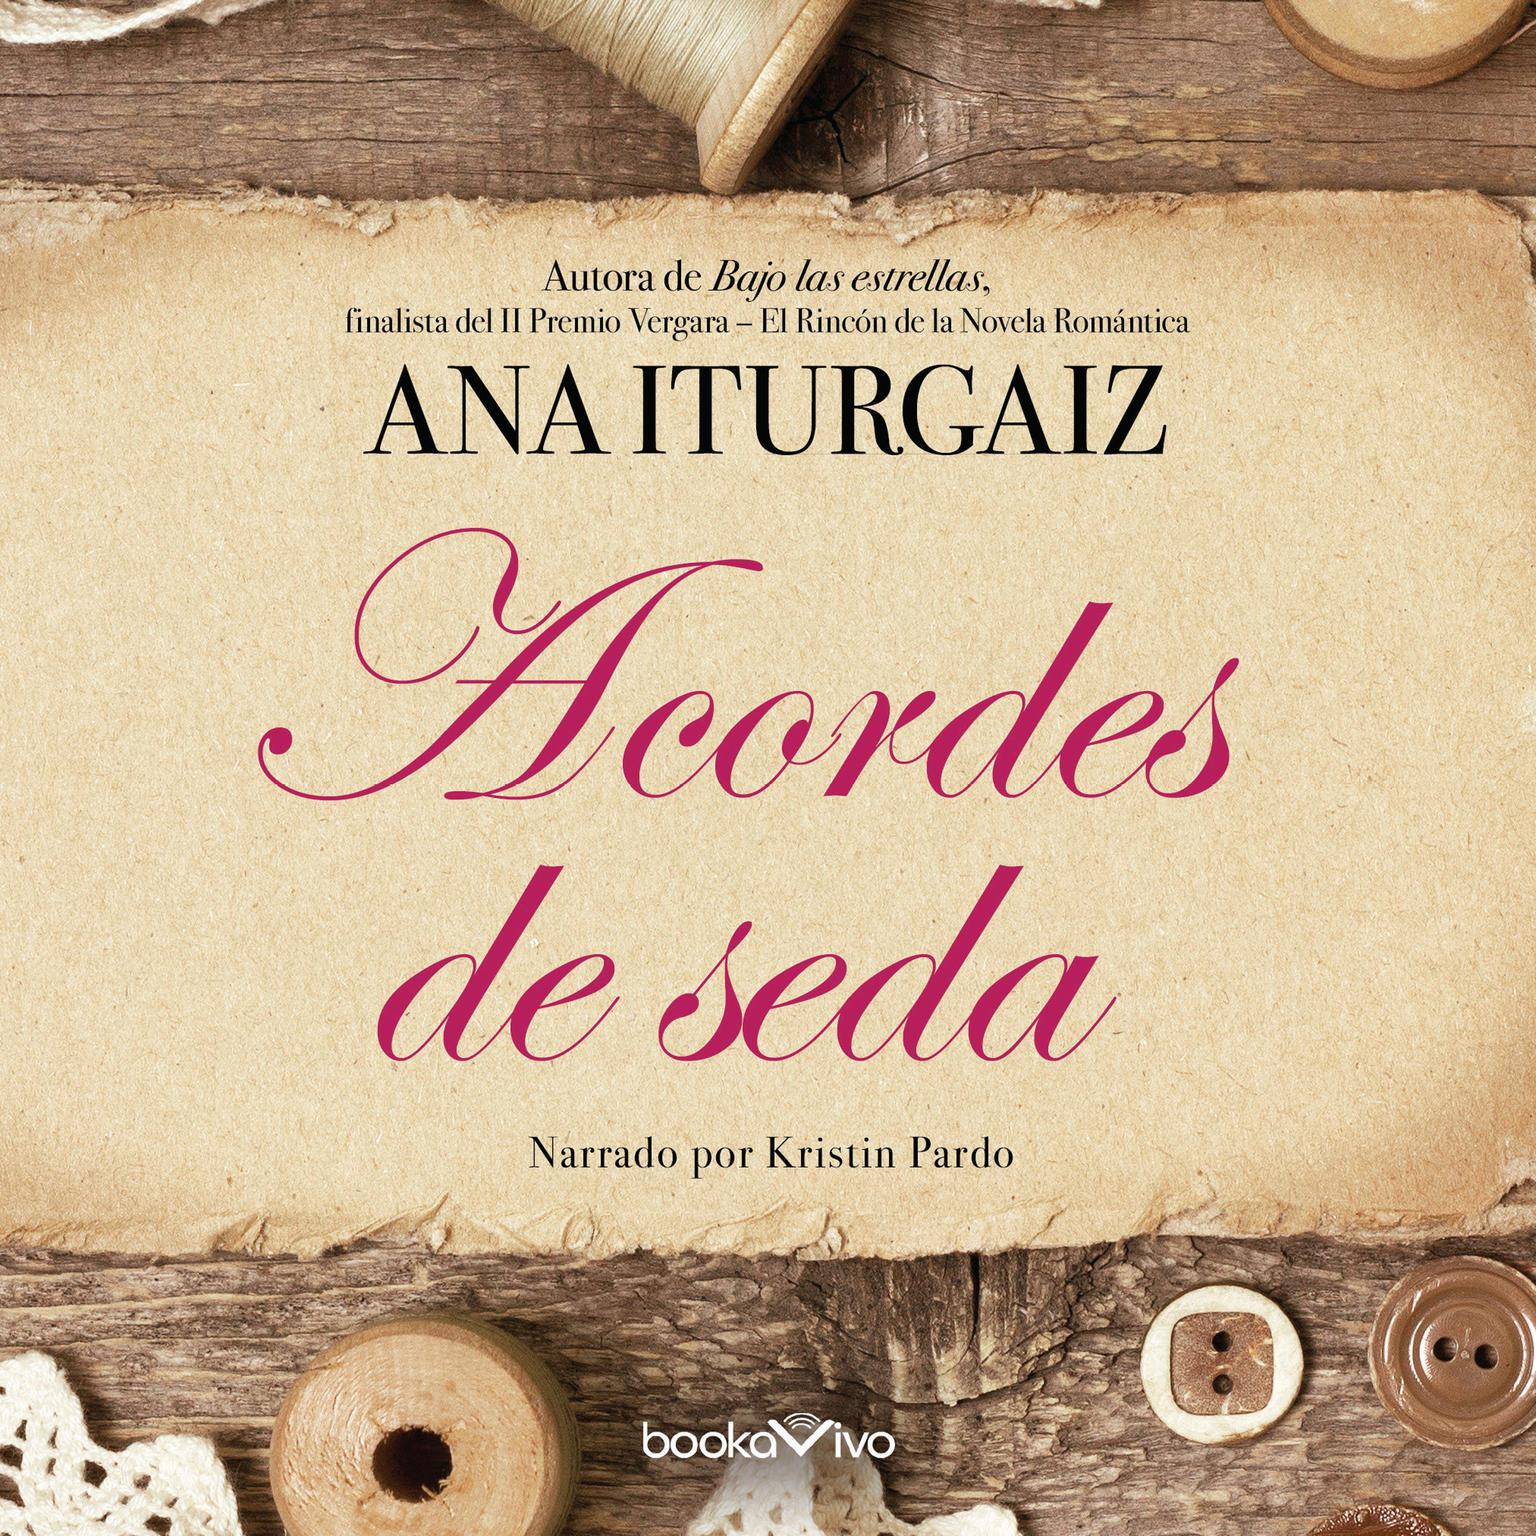 Acordes de Seda (Silk Chords) Audiobook, by Ana Iturgaiz